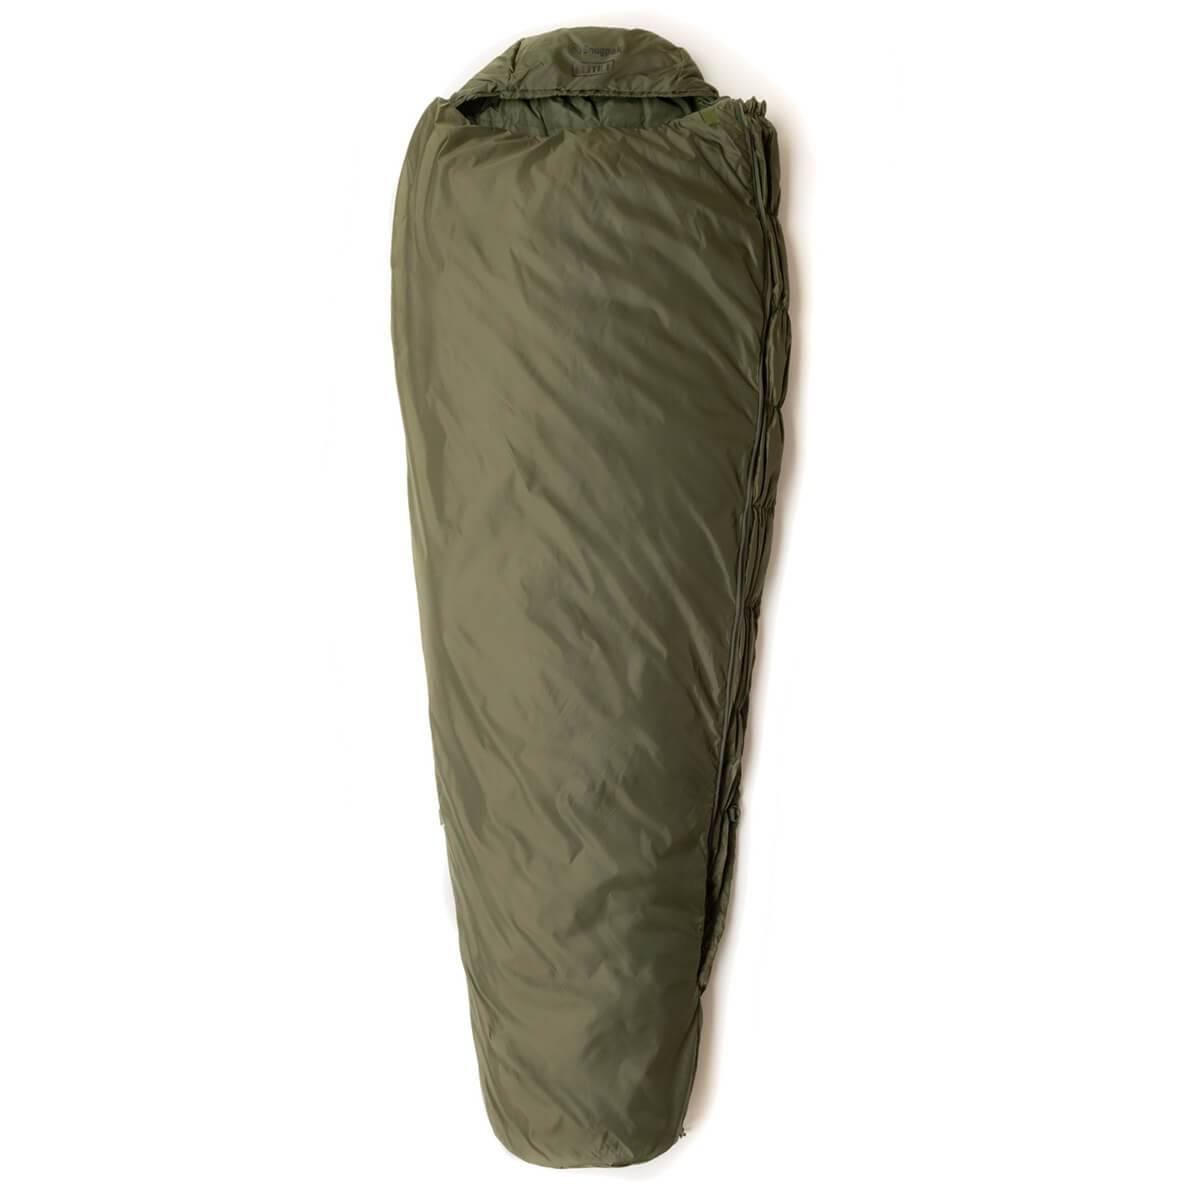 Snugpak Softie Elite 1 Sleeping Bag Olive Green - John Bull Clothing